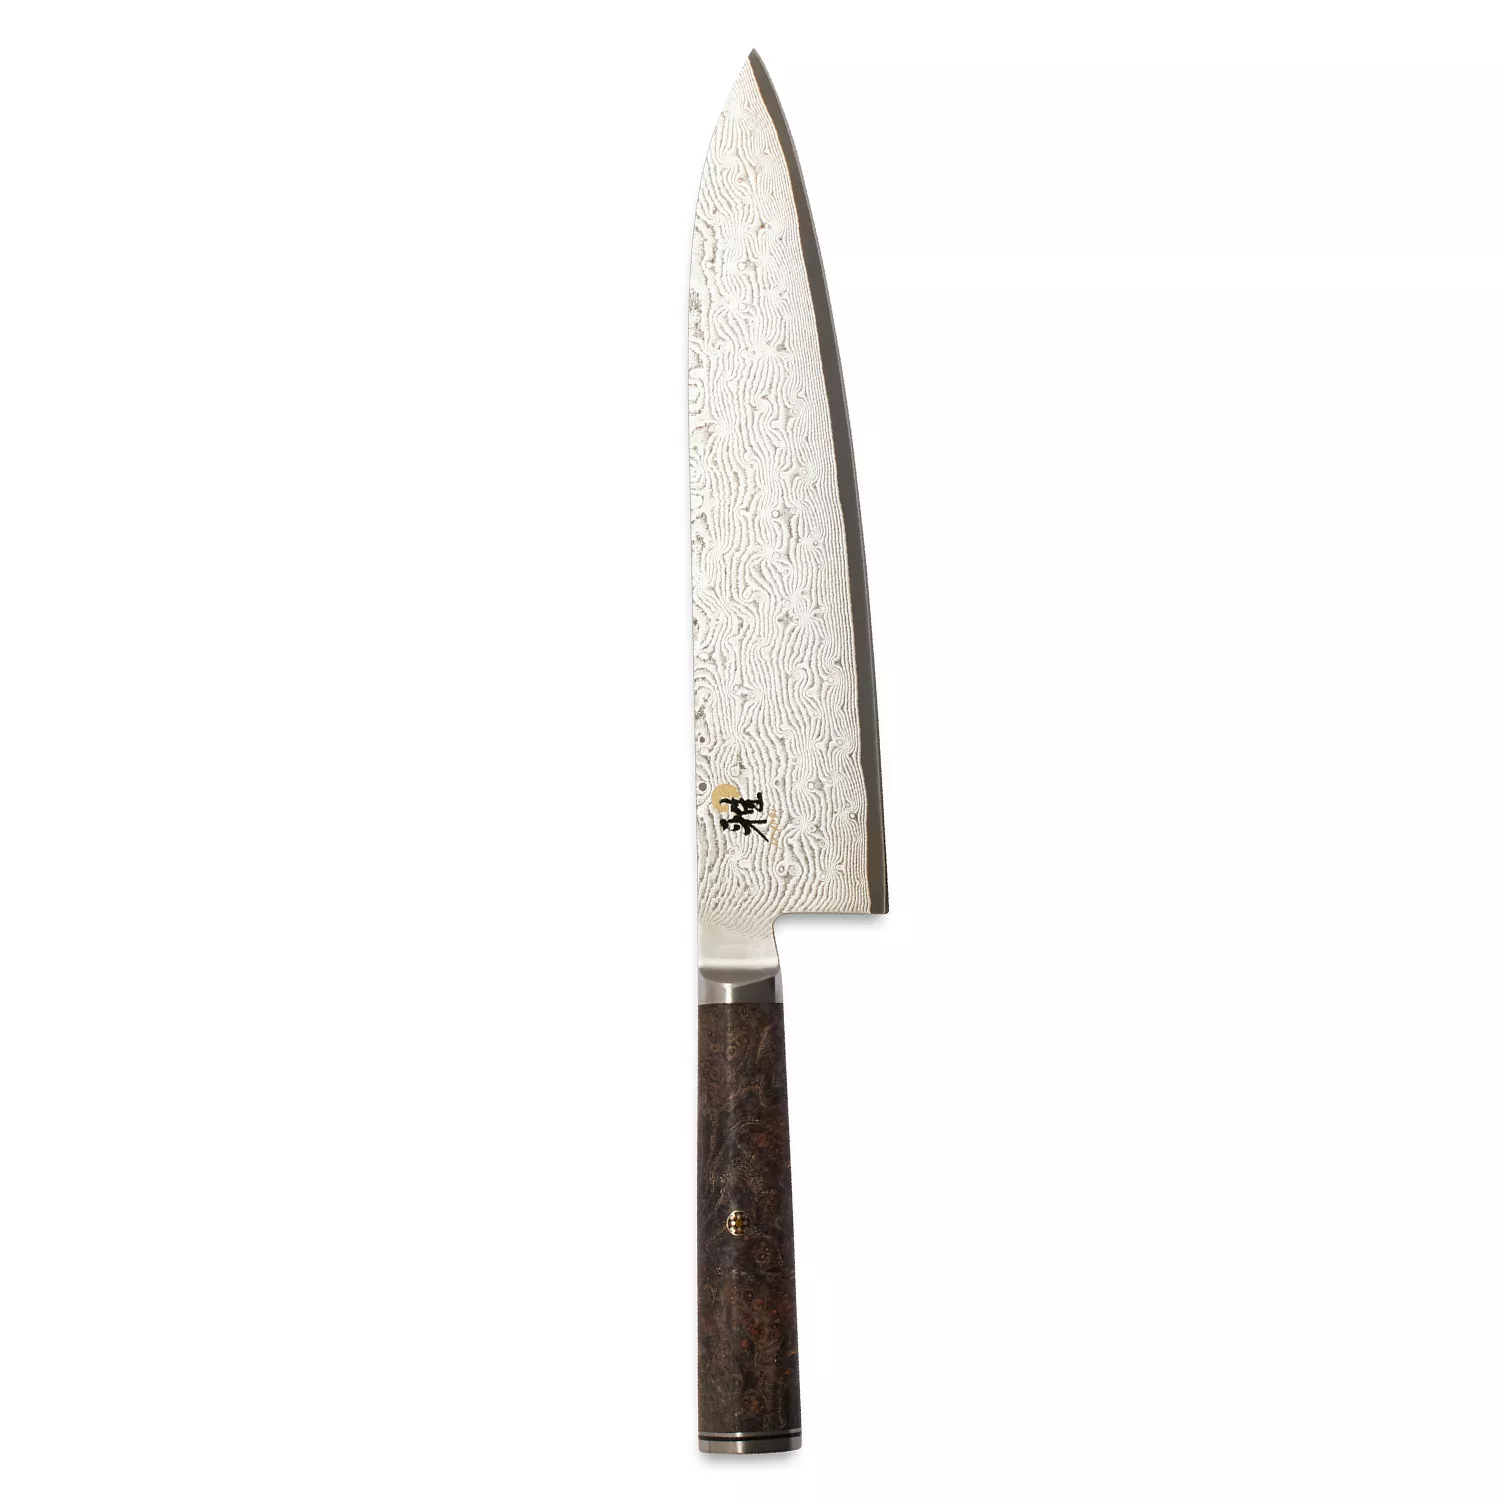 Miyabi Black 5000MCD67 8 Chef's Knife